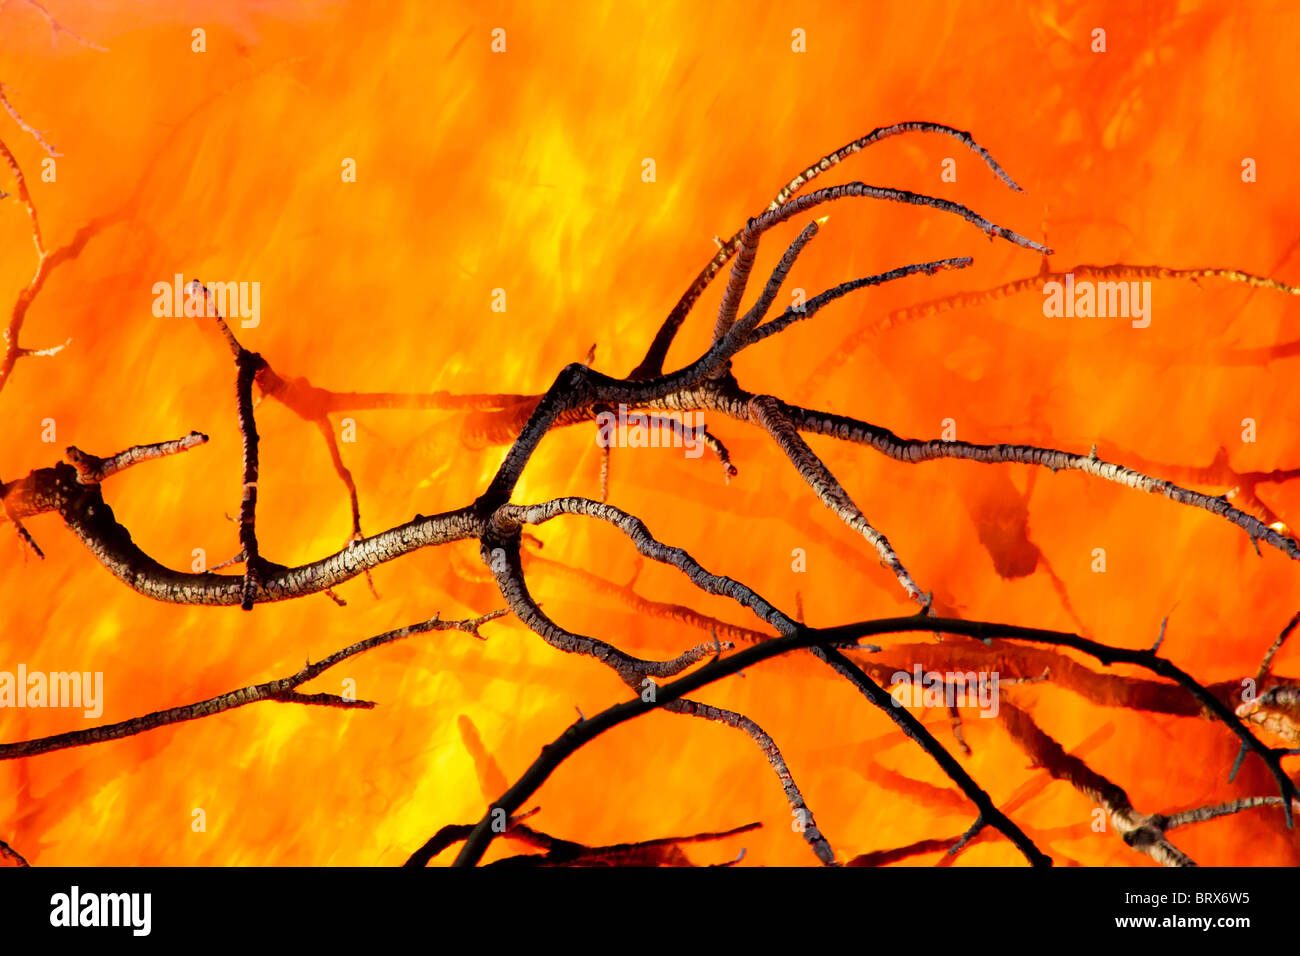 Libre de branches d'arbre brûlé dans un grand feu en plein air Banque D'Images